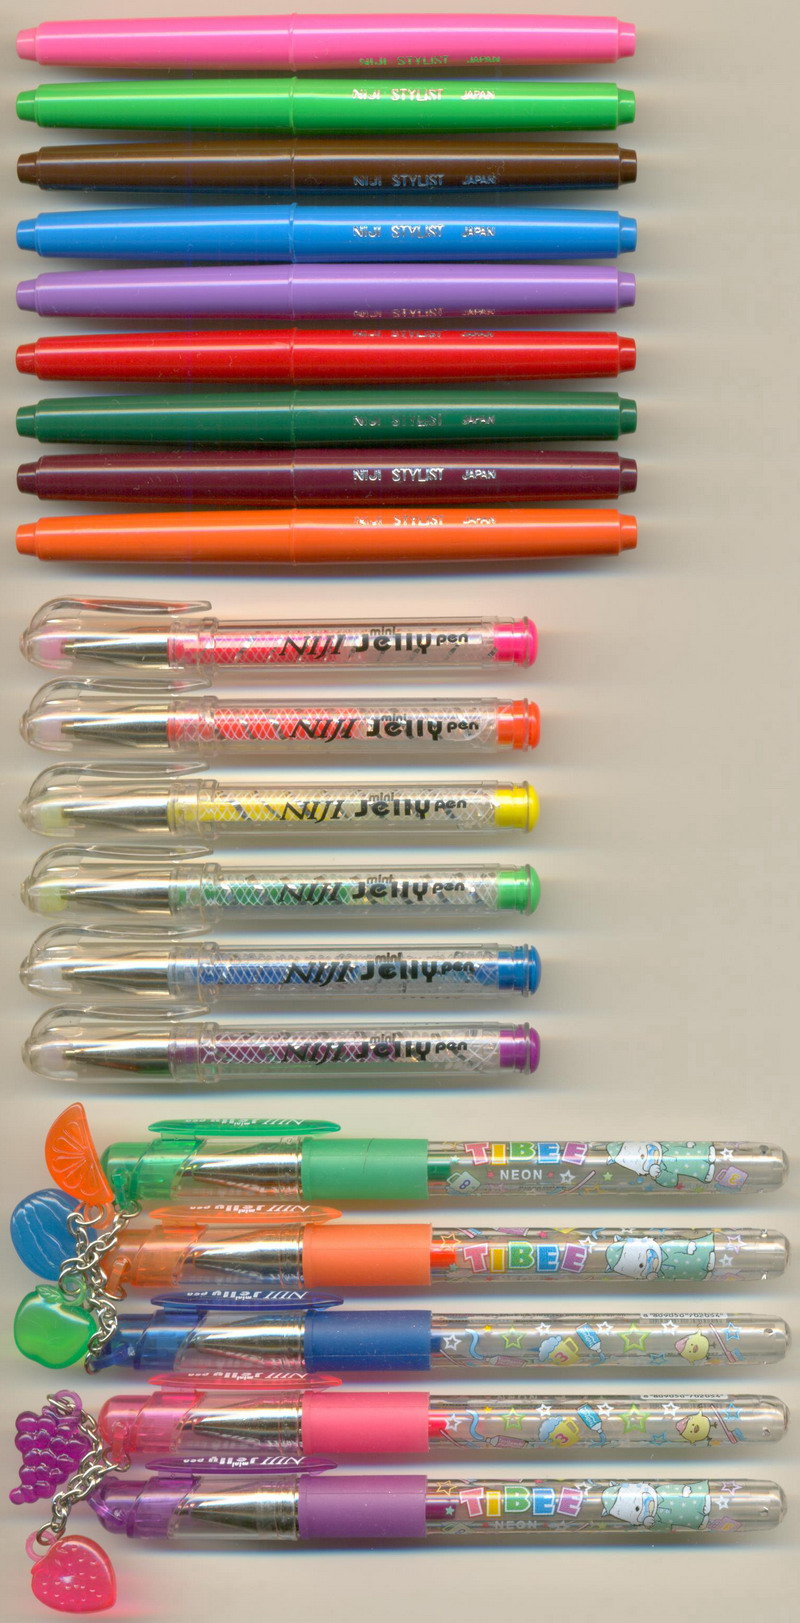 NIJI STYLIST / mini Jelly pen / mini Jelly pen TIBEE